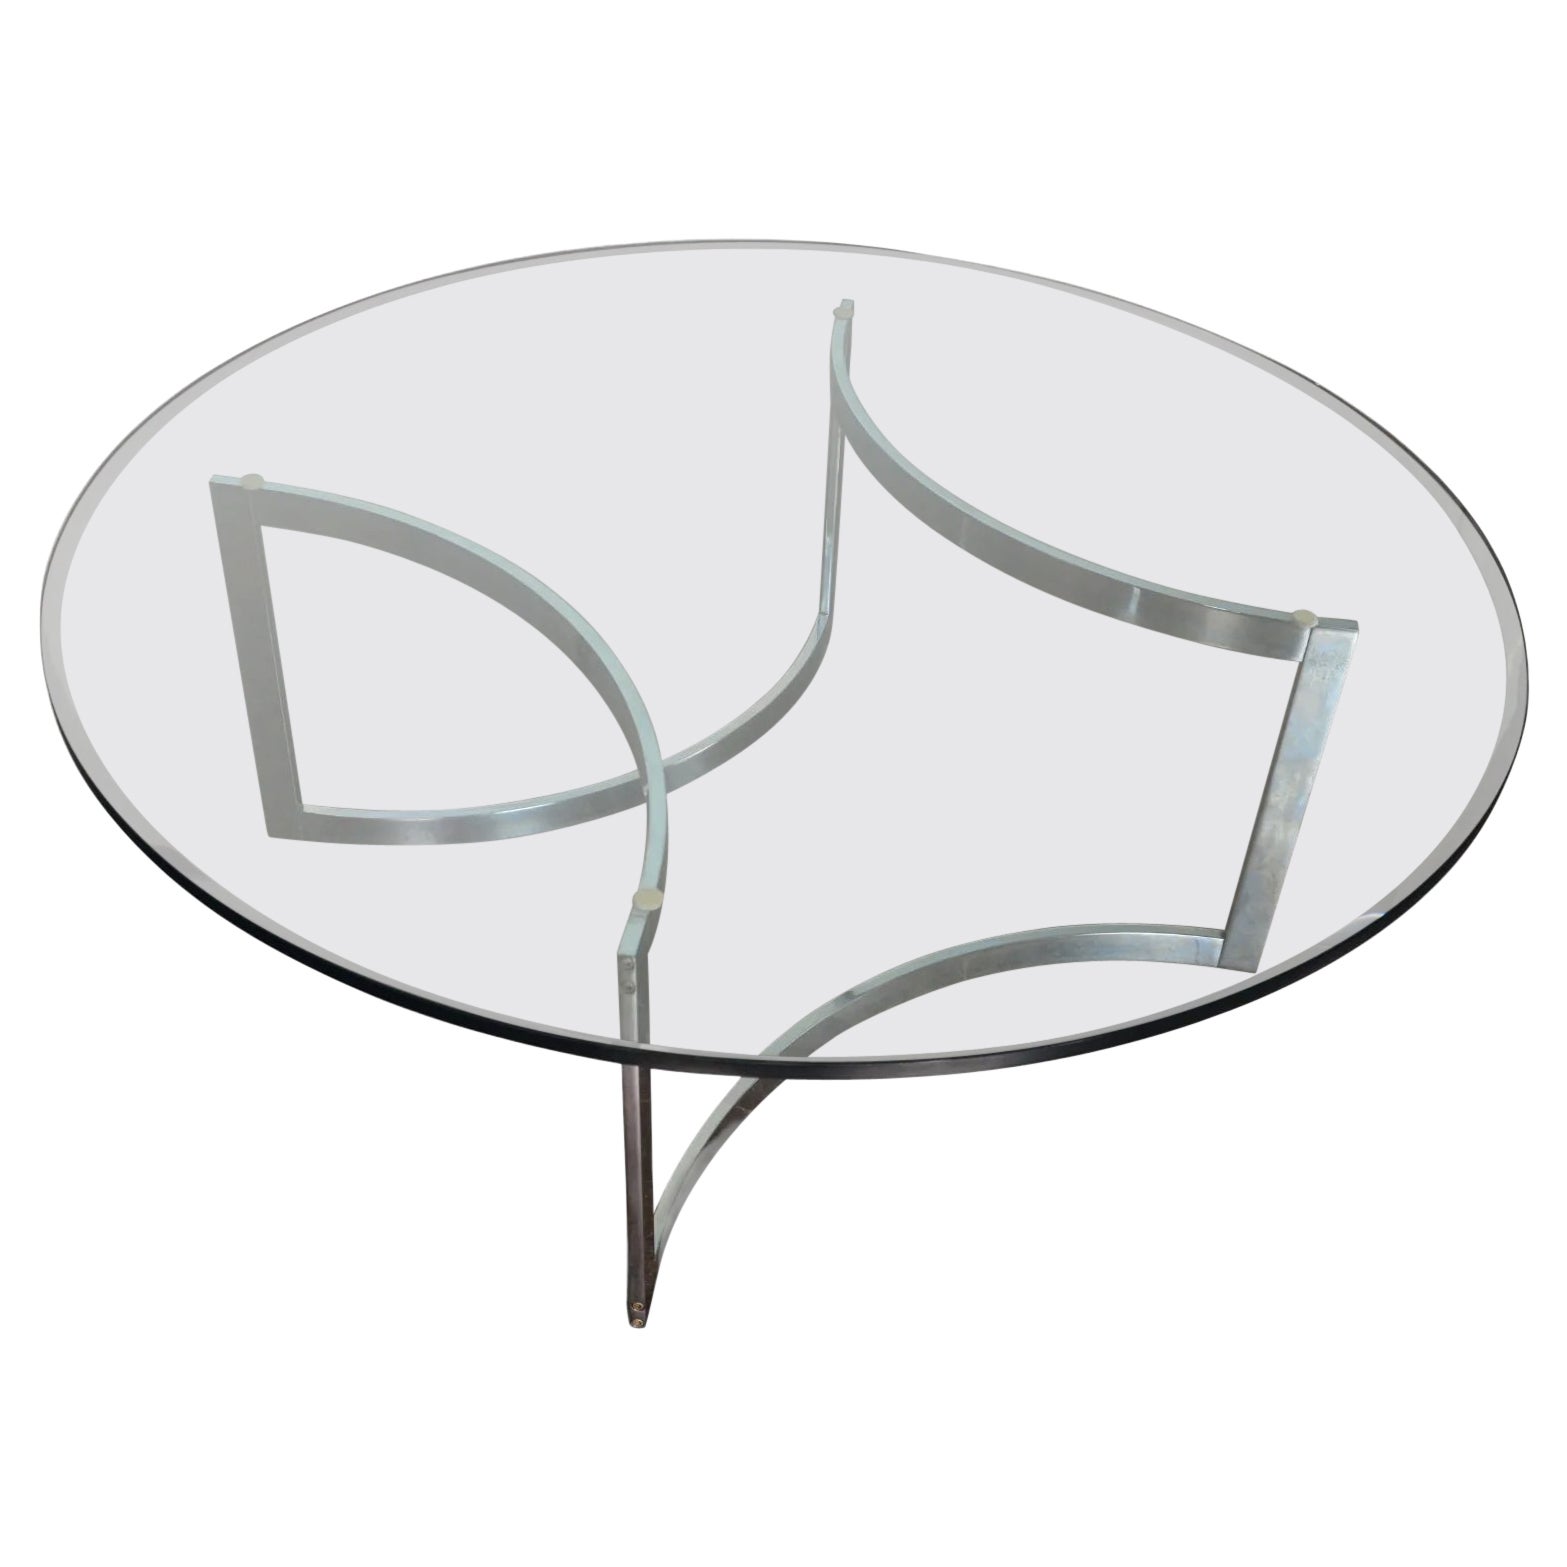 Milo Baughman Style Chrome + Glass Coffee Table For Sale